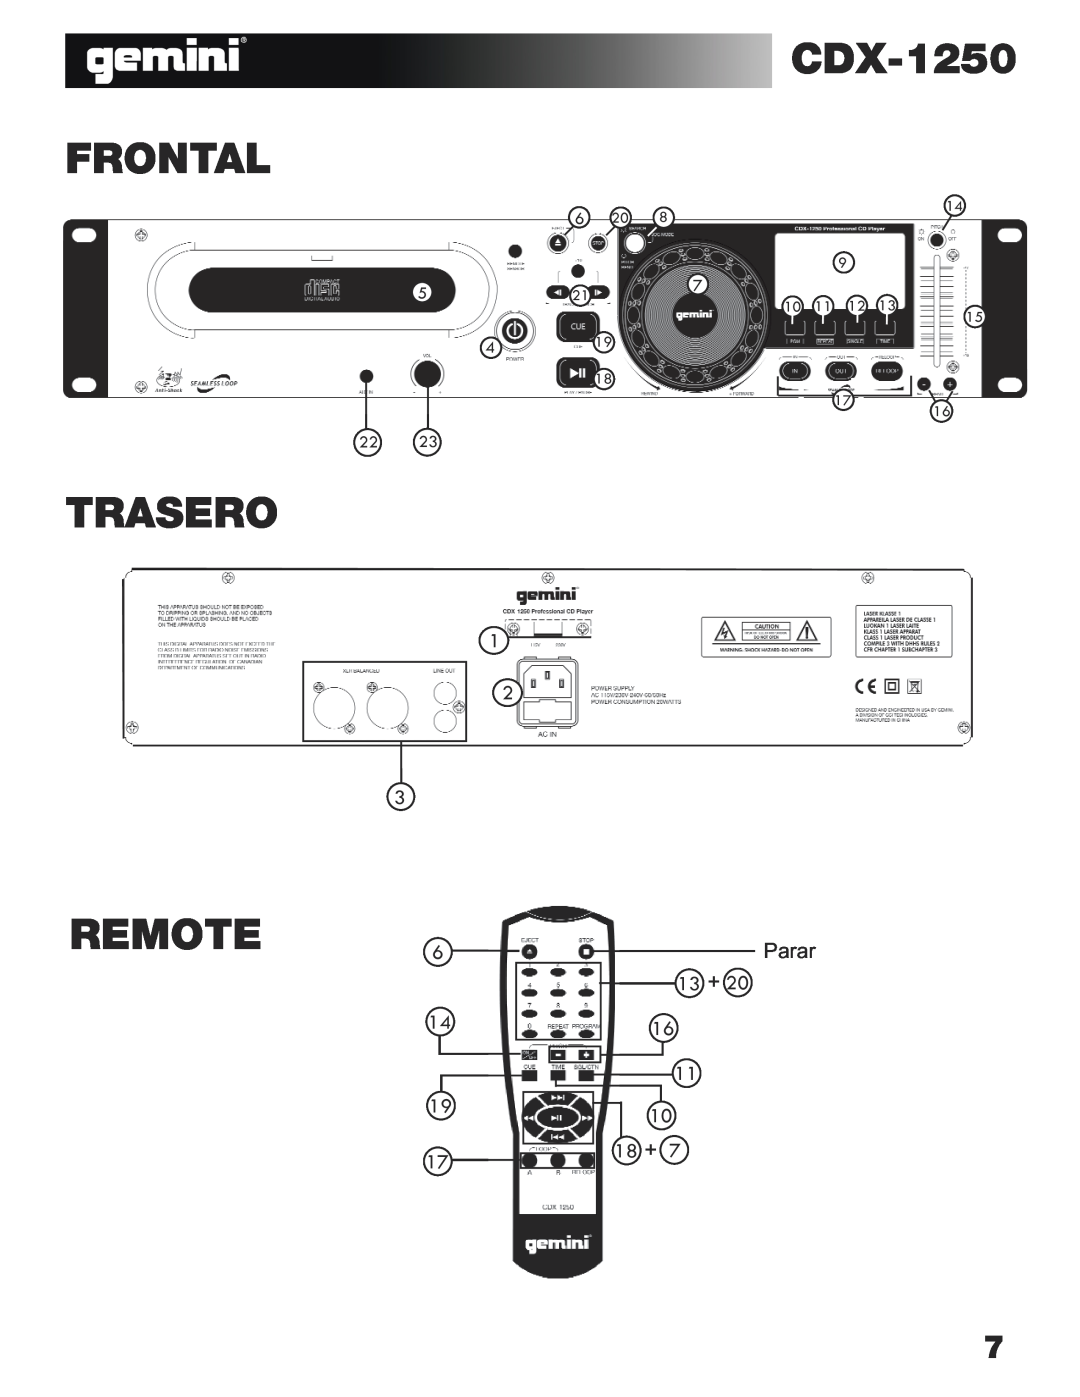 Gemini CDX-1250 manual Frontal, Trasero, Parar, Remote, 13 + 16 11 10 18 + 